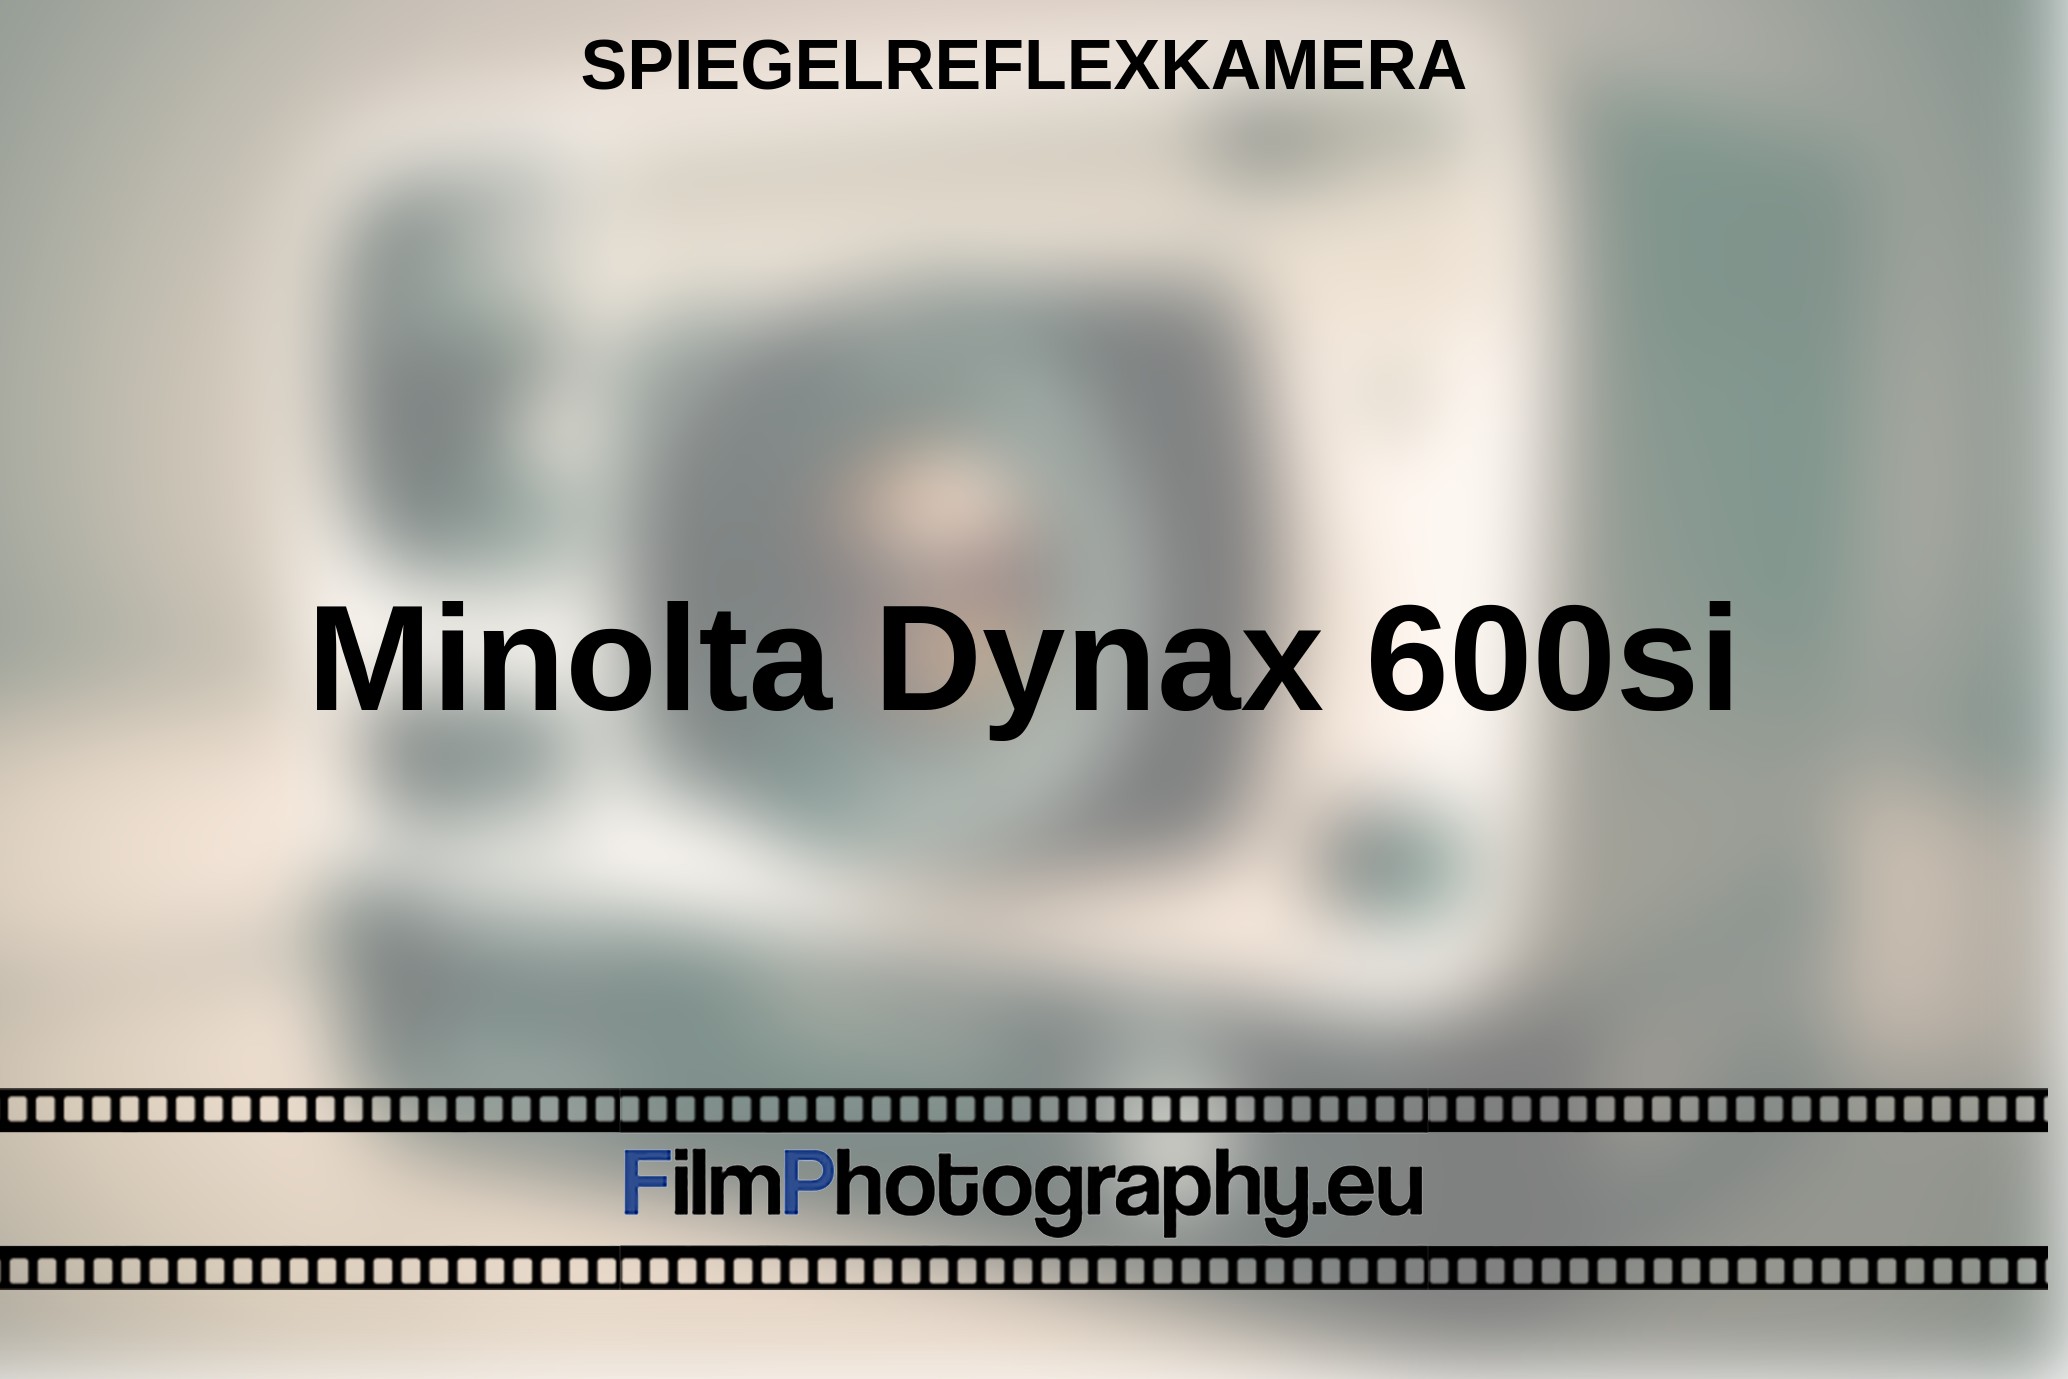 Minolta-Dynax-600si-Spiegelreflexkamera-bnv.jpg